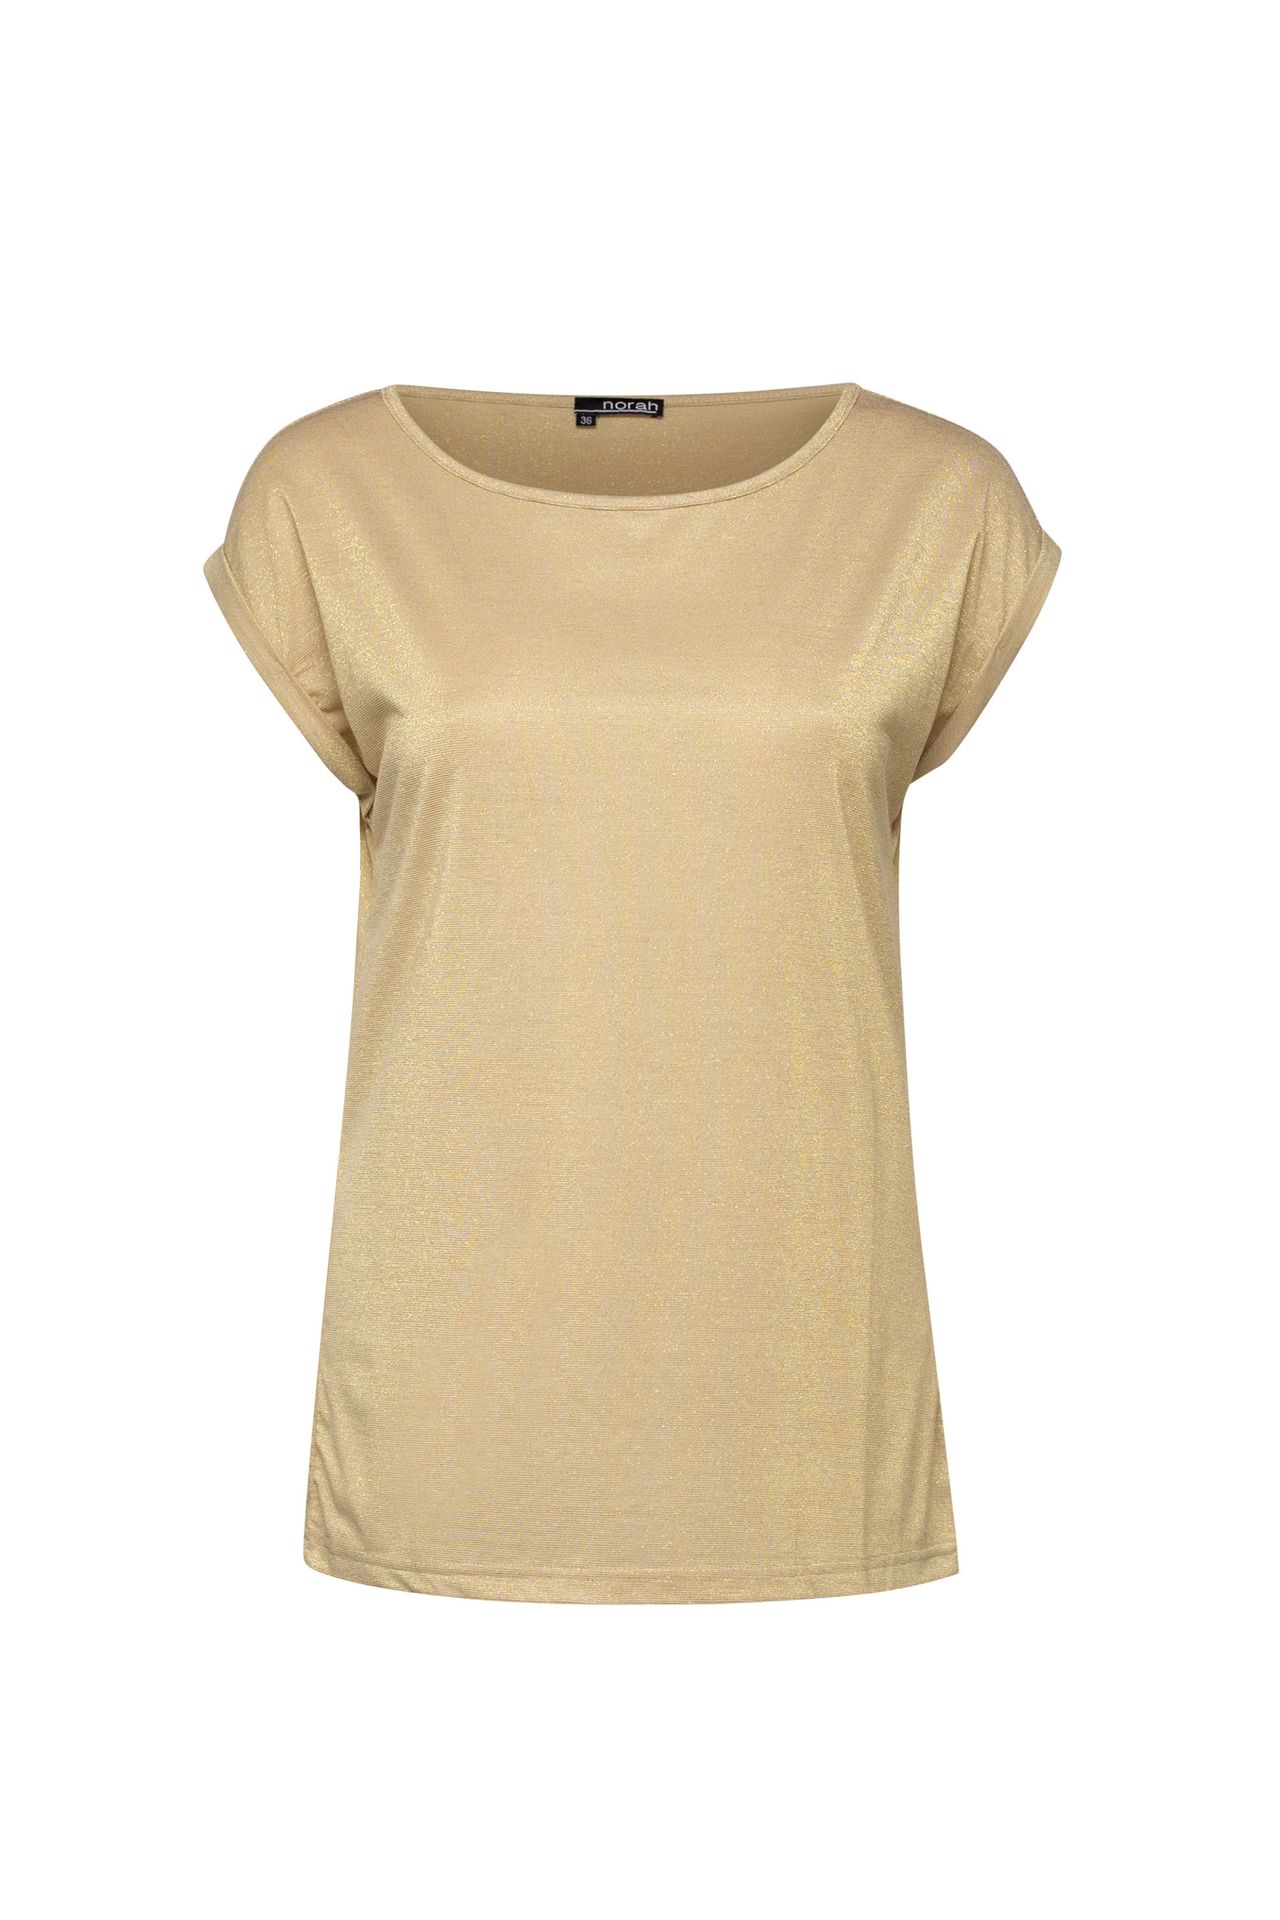 Norah Shirt beige goud sand 210052-110